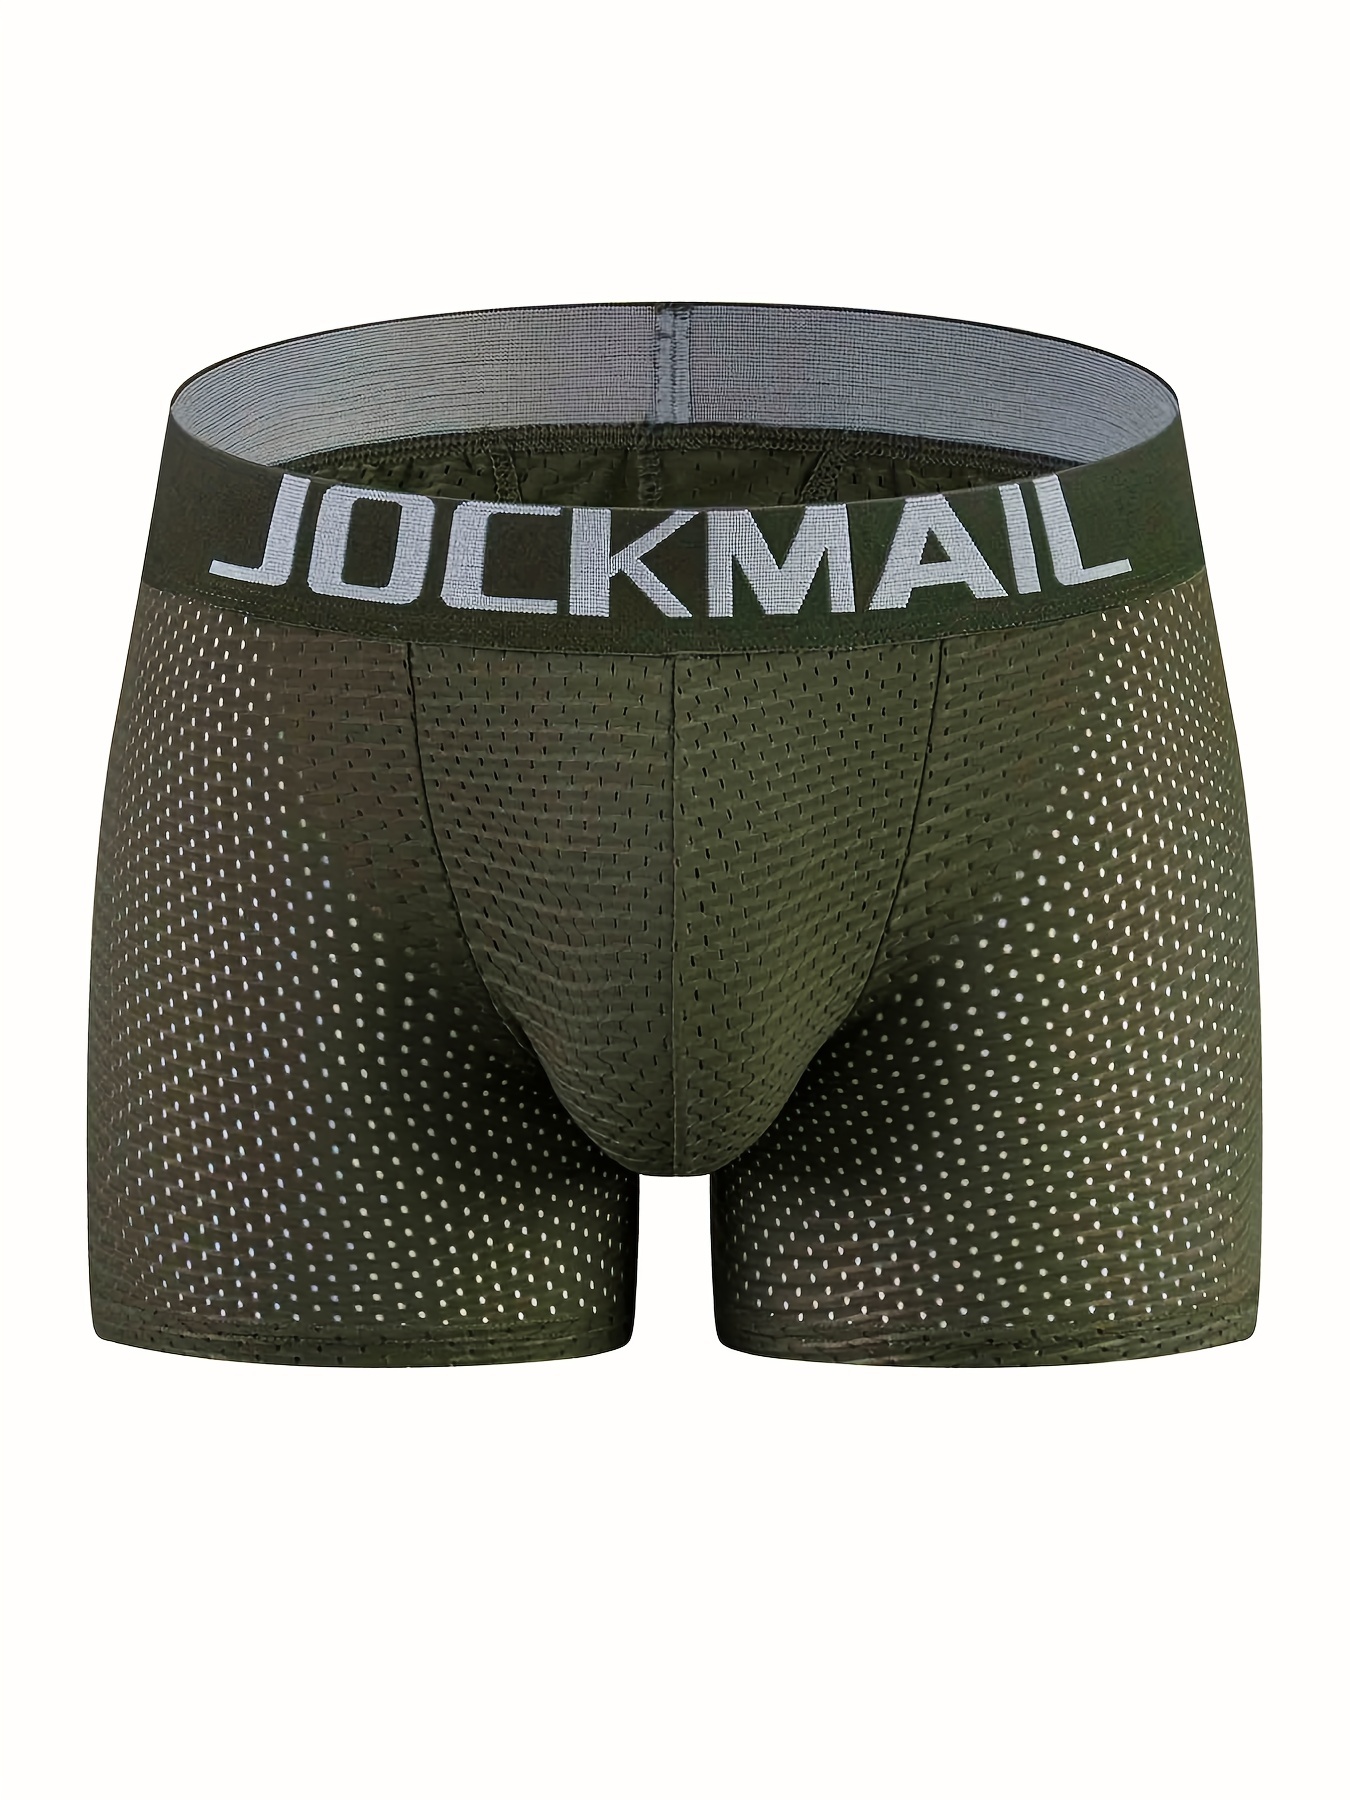 Jockmail Men's Sexy Jockstrap Mesh Breathable Athletic - Temu Canada